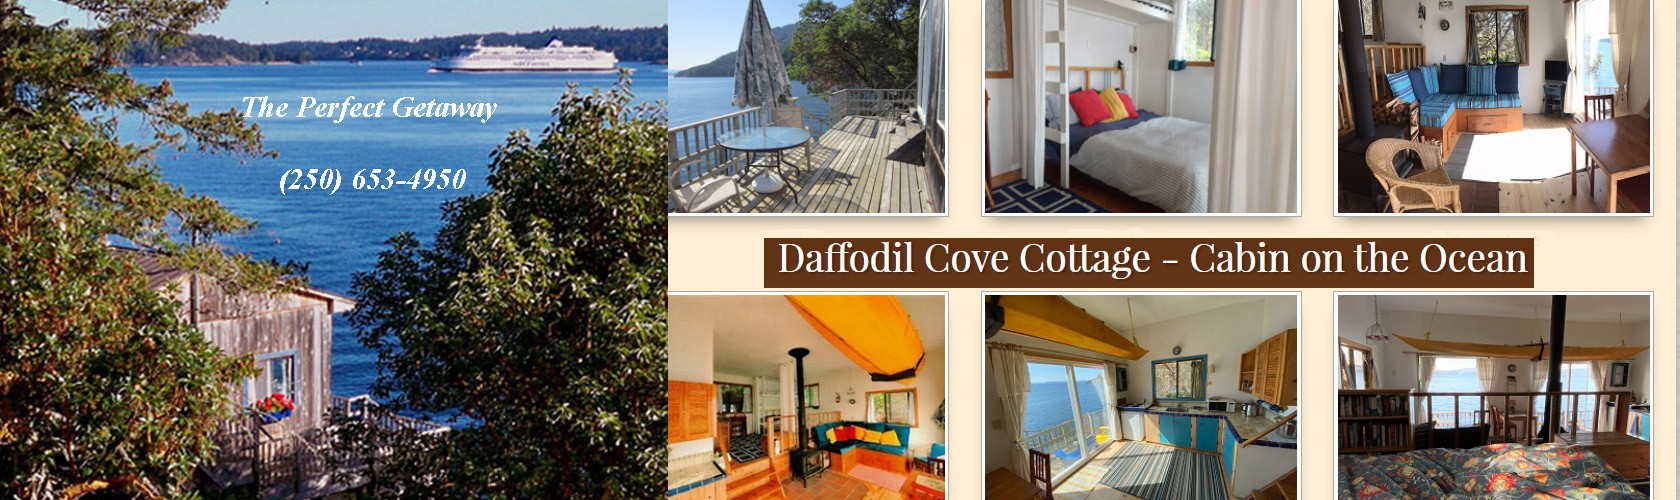 Daffodil Cove Cottage